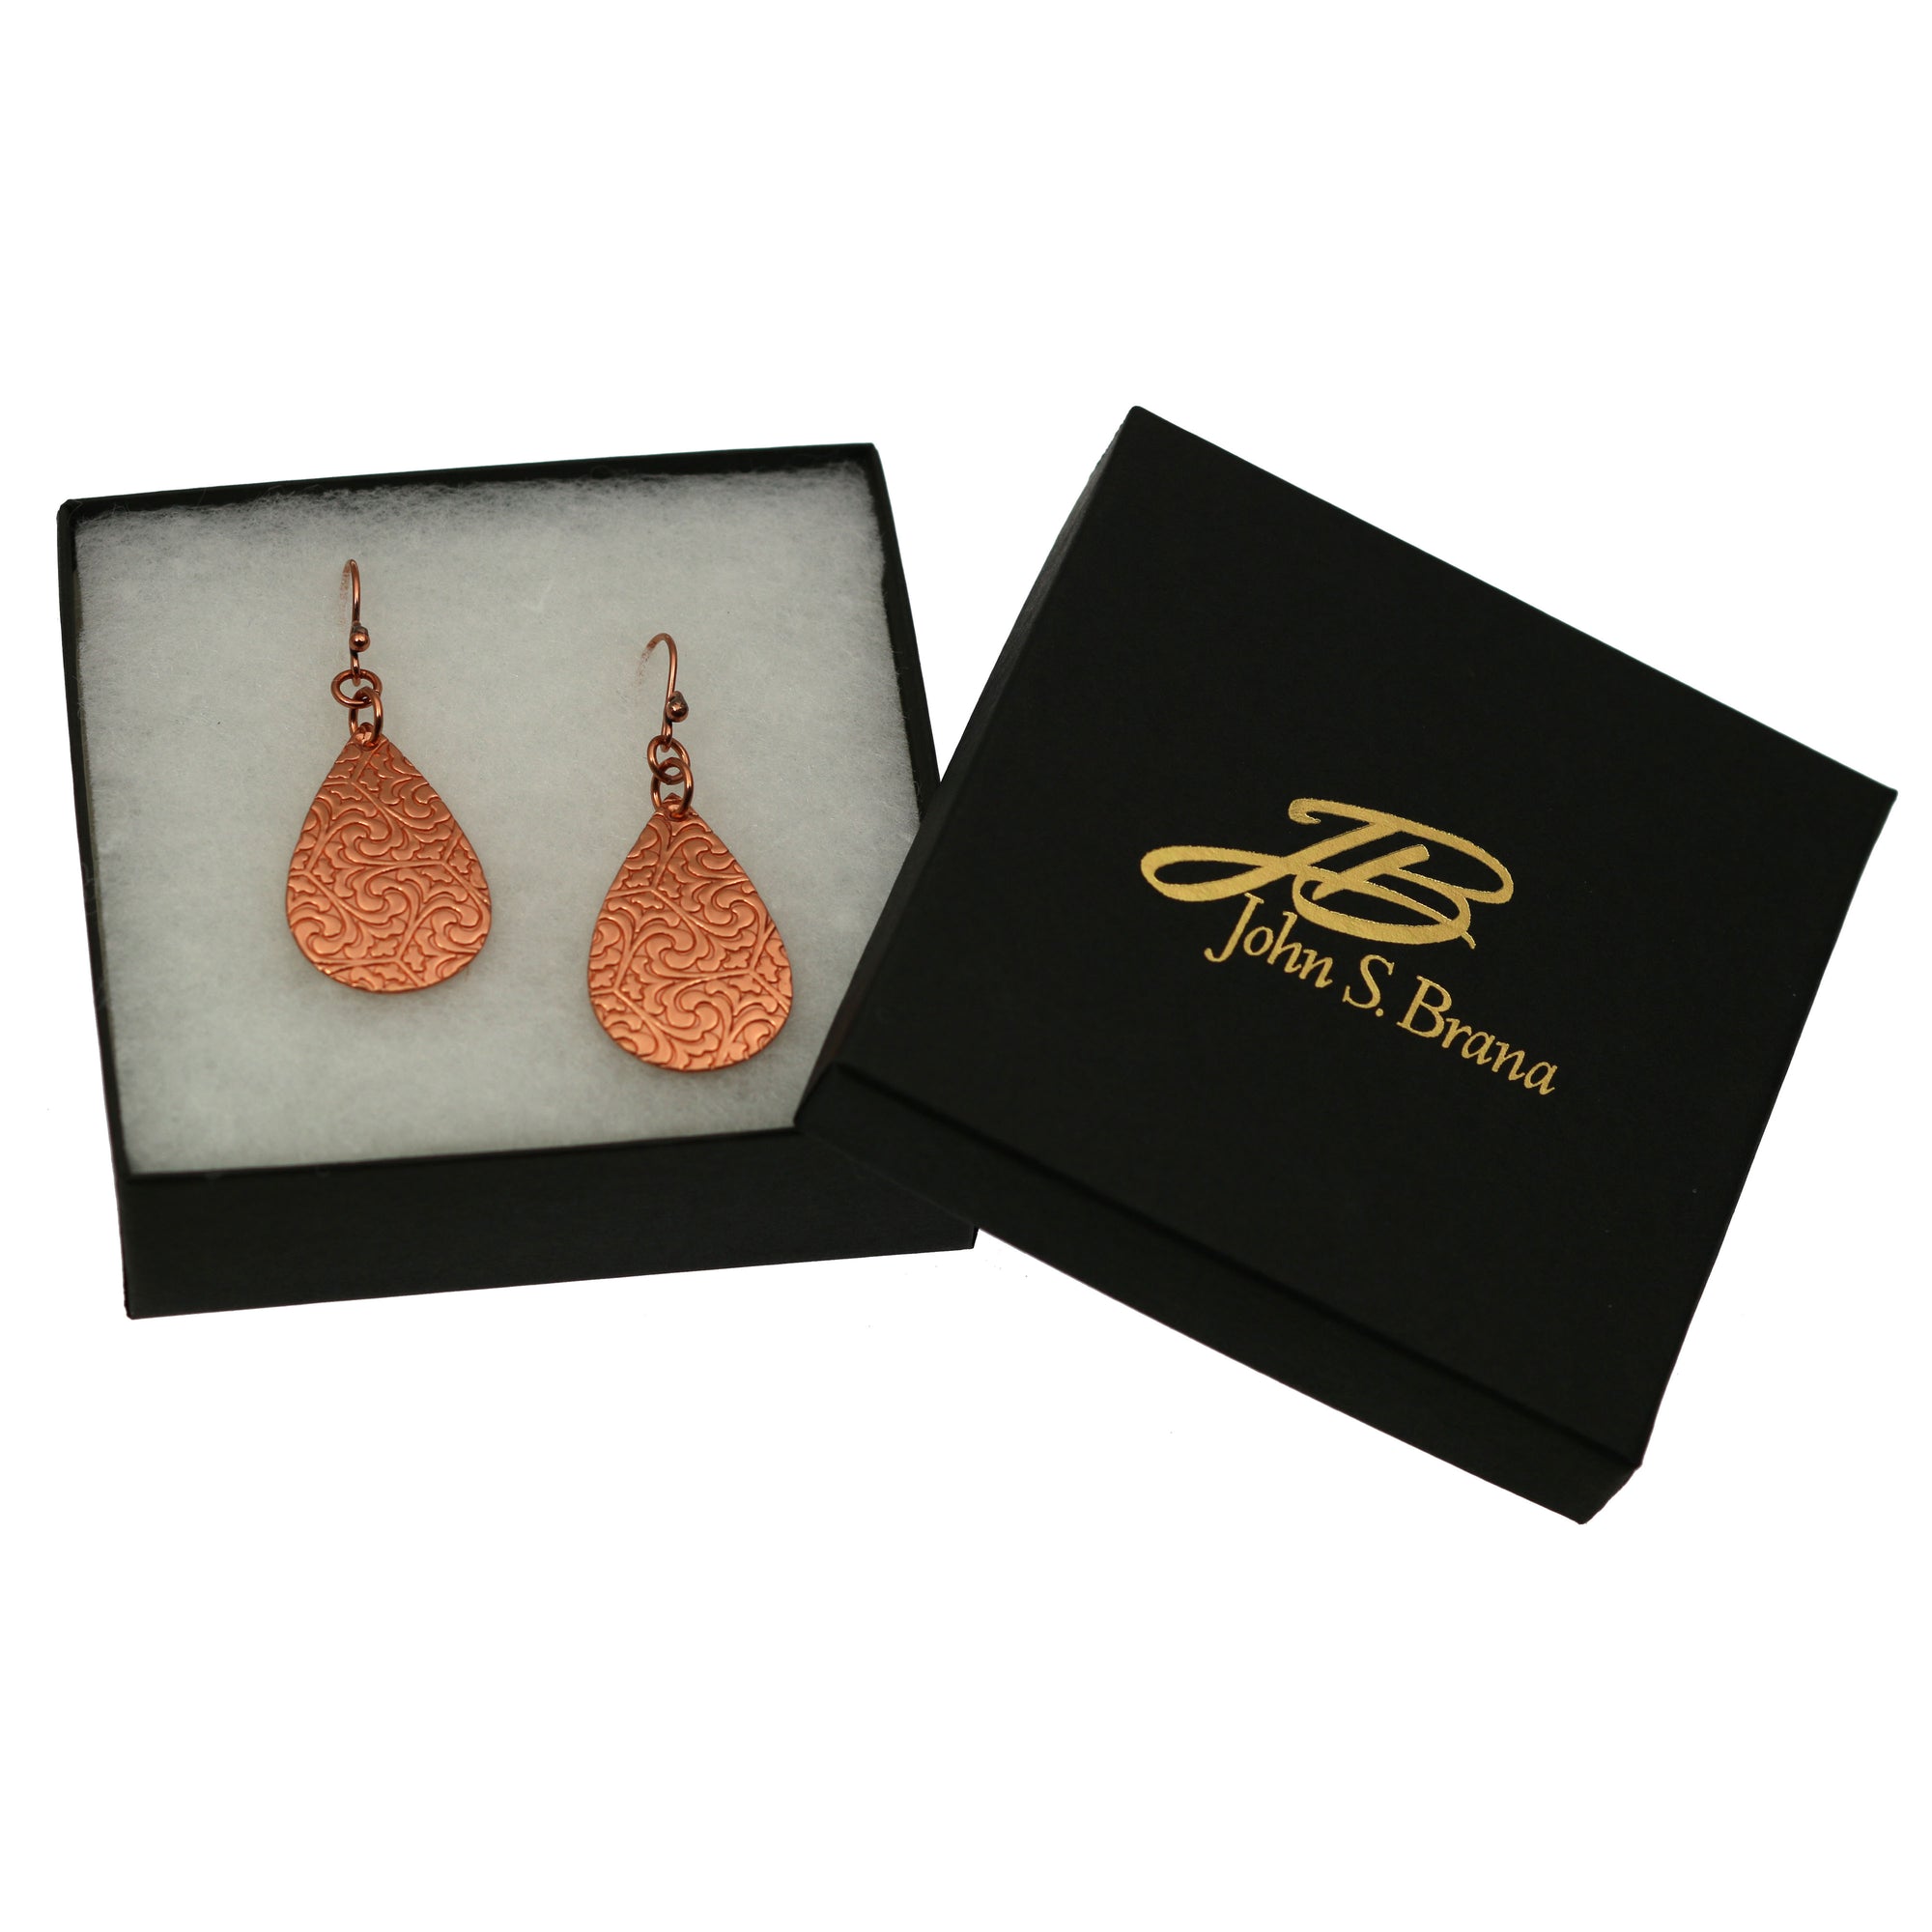 Damask Embossed Small Copper Teardrop Earrings Displayed in Black Gift Box